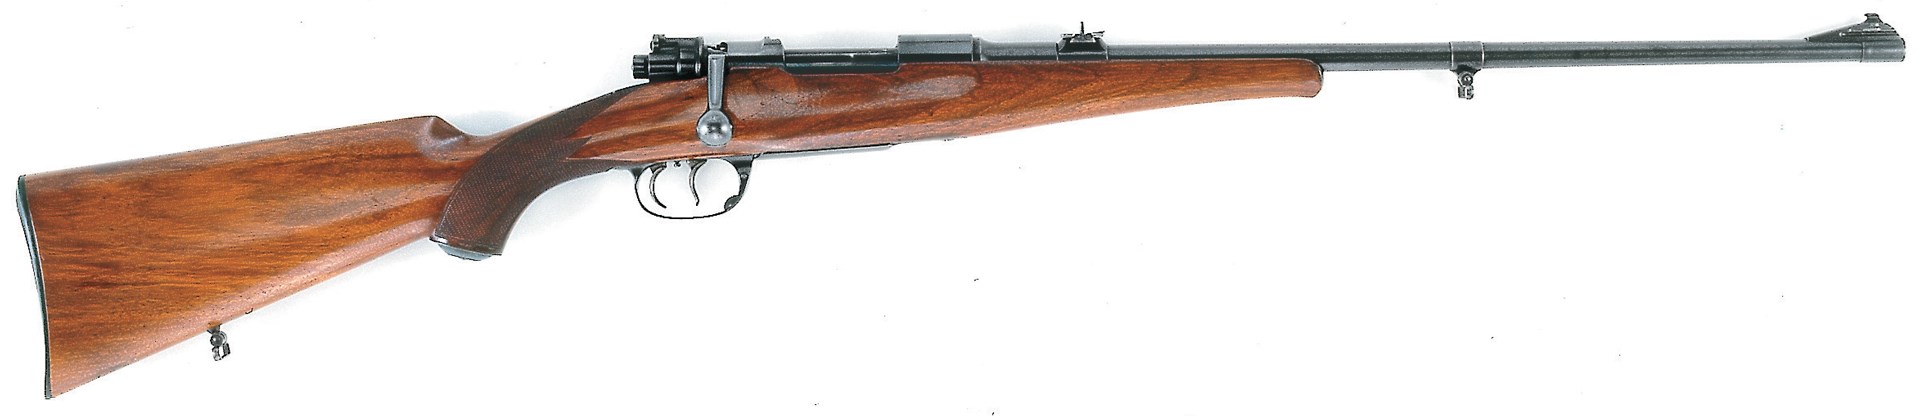 right side of bolt-action mauser sporter hunting rifle double trigger safari grade gun wood stock